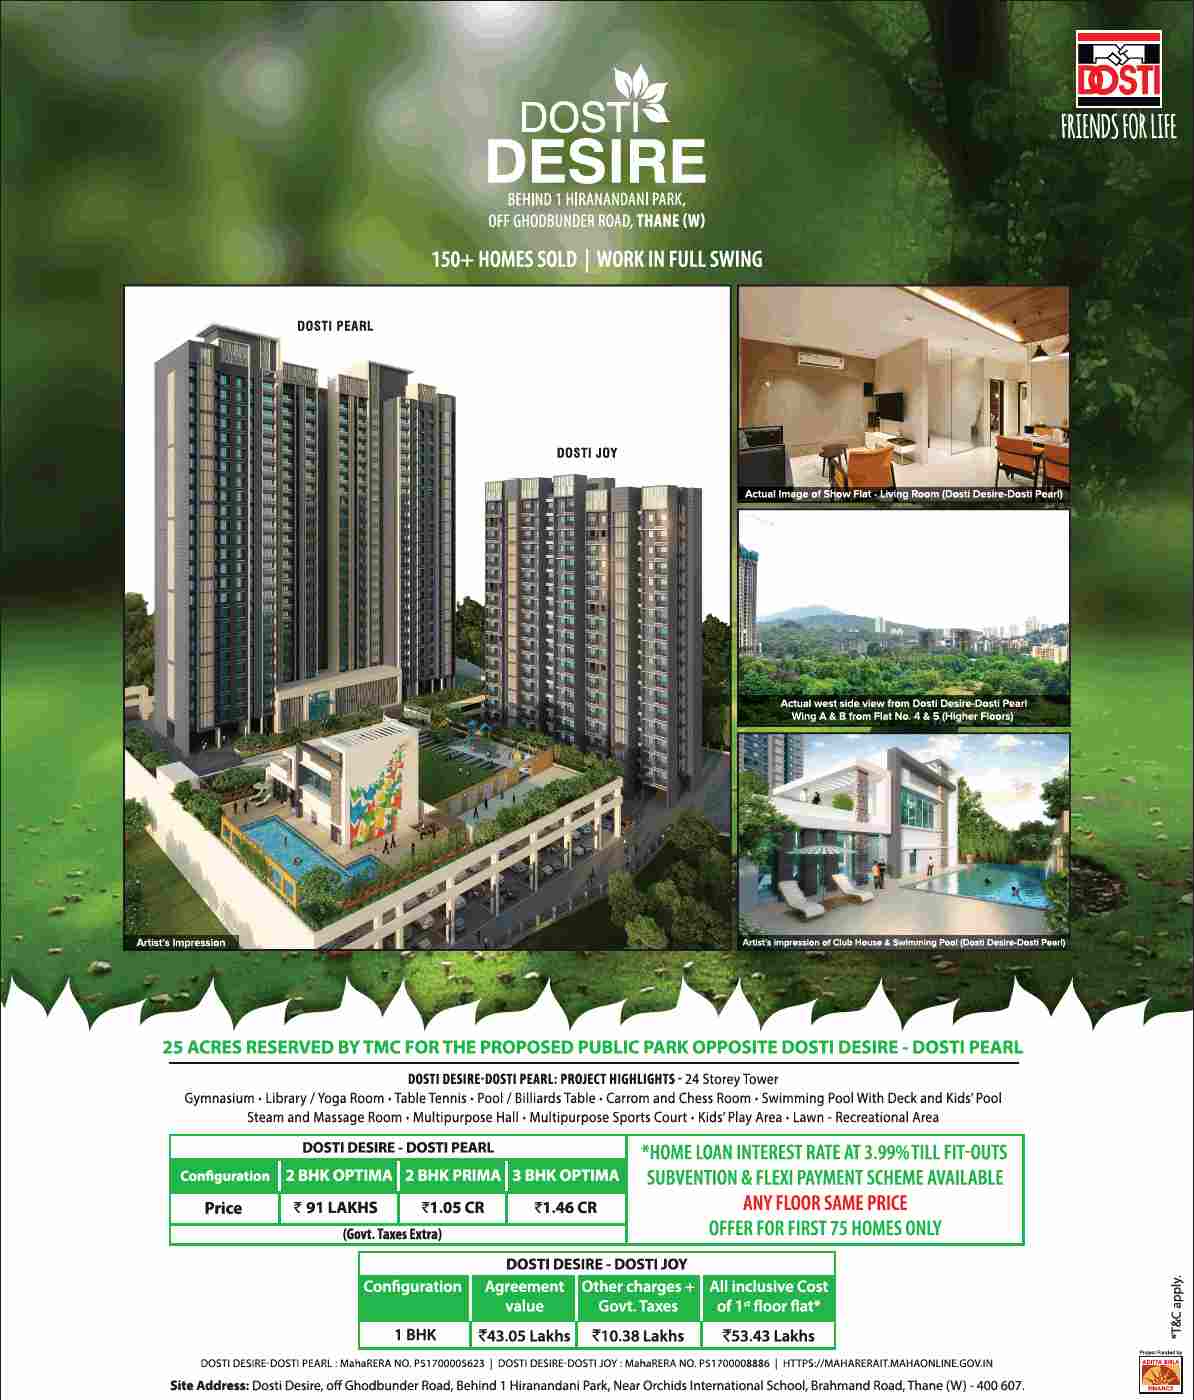 Experience world class amenities at Dosti Desire in Mumbai